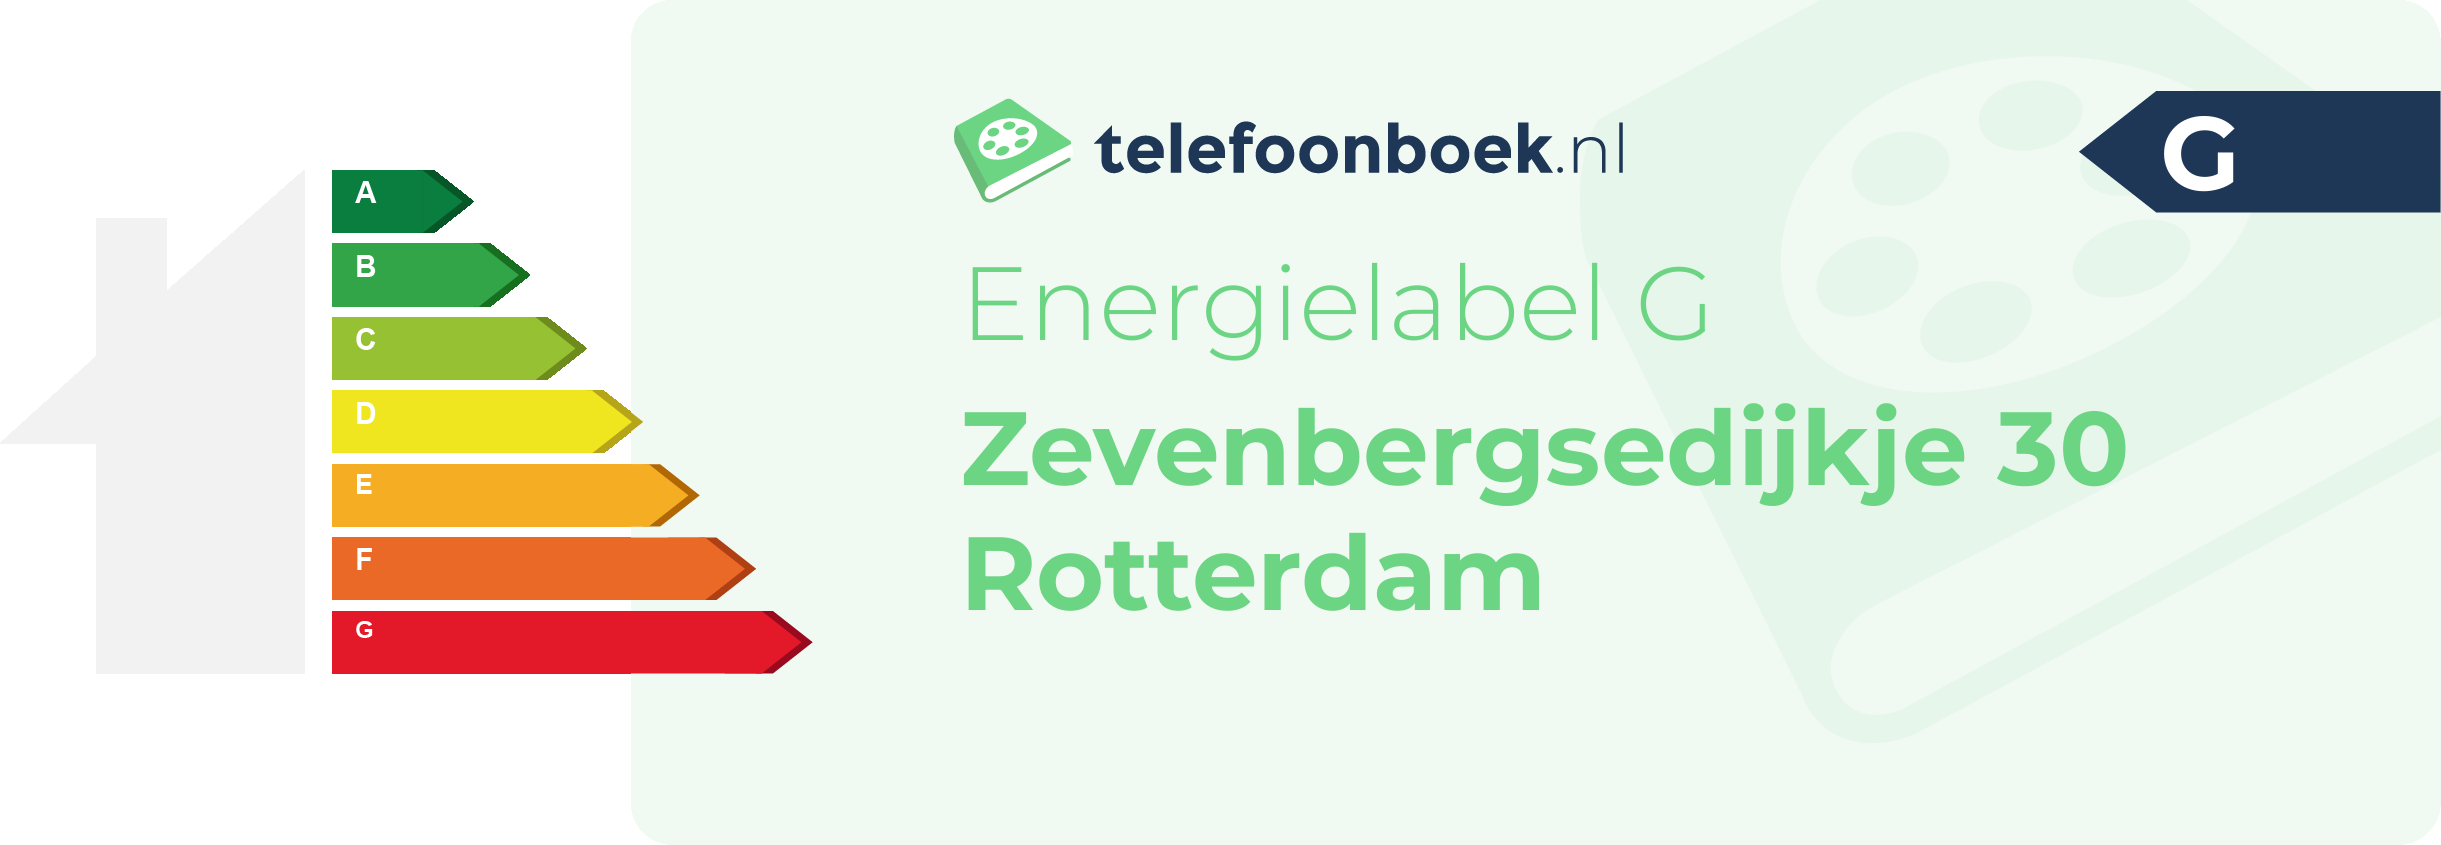 Energielabel Zevenbergsedijkje 30 Rotterdam